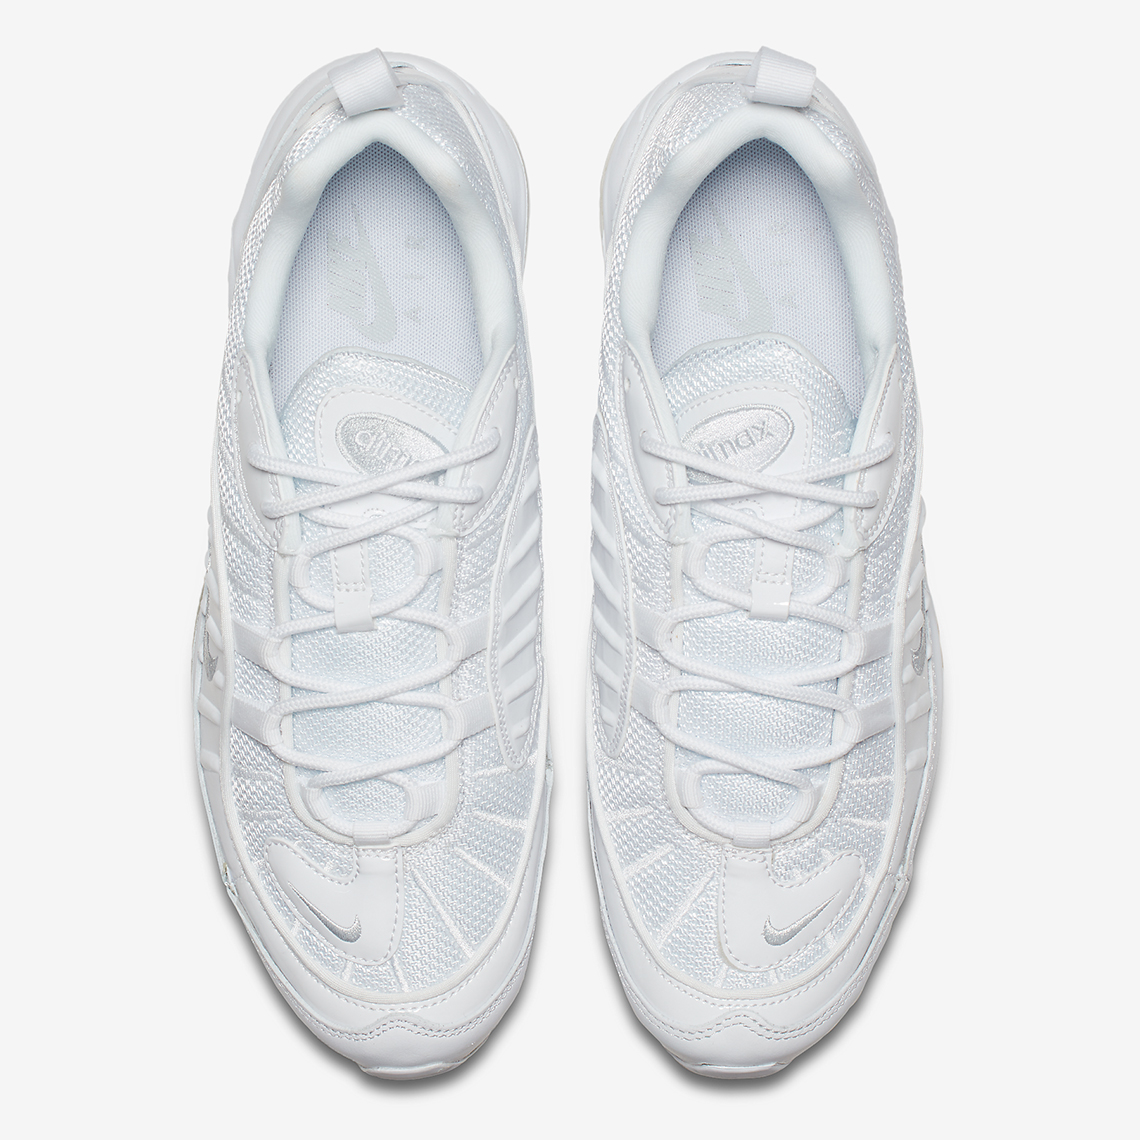 Nike Air Max 98 Triple White 640744-106 Release Info | SneakerNews.com